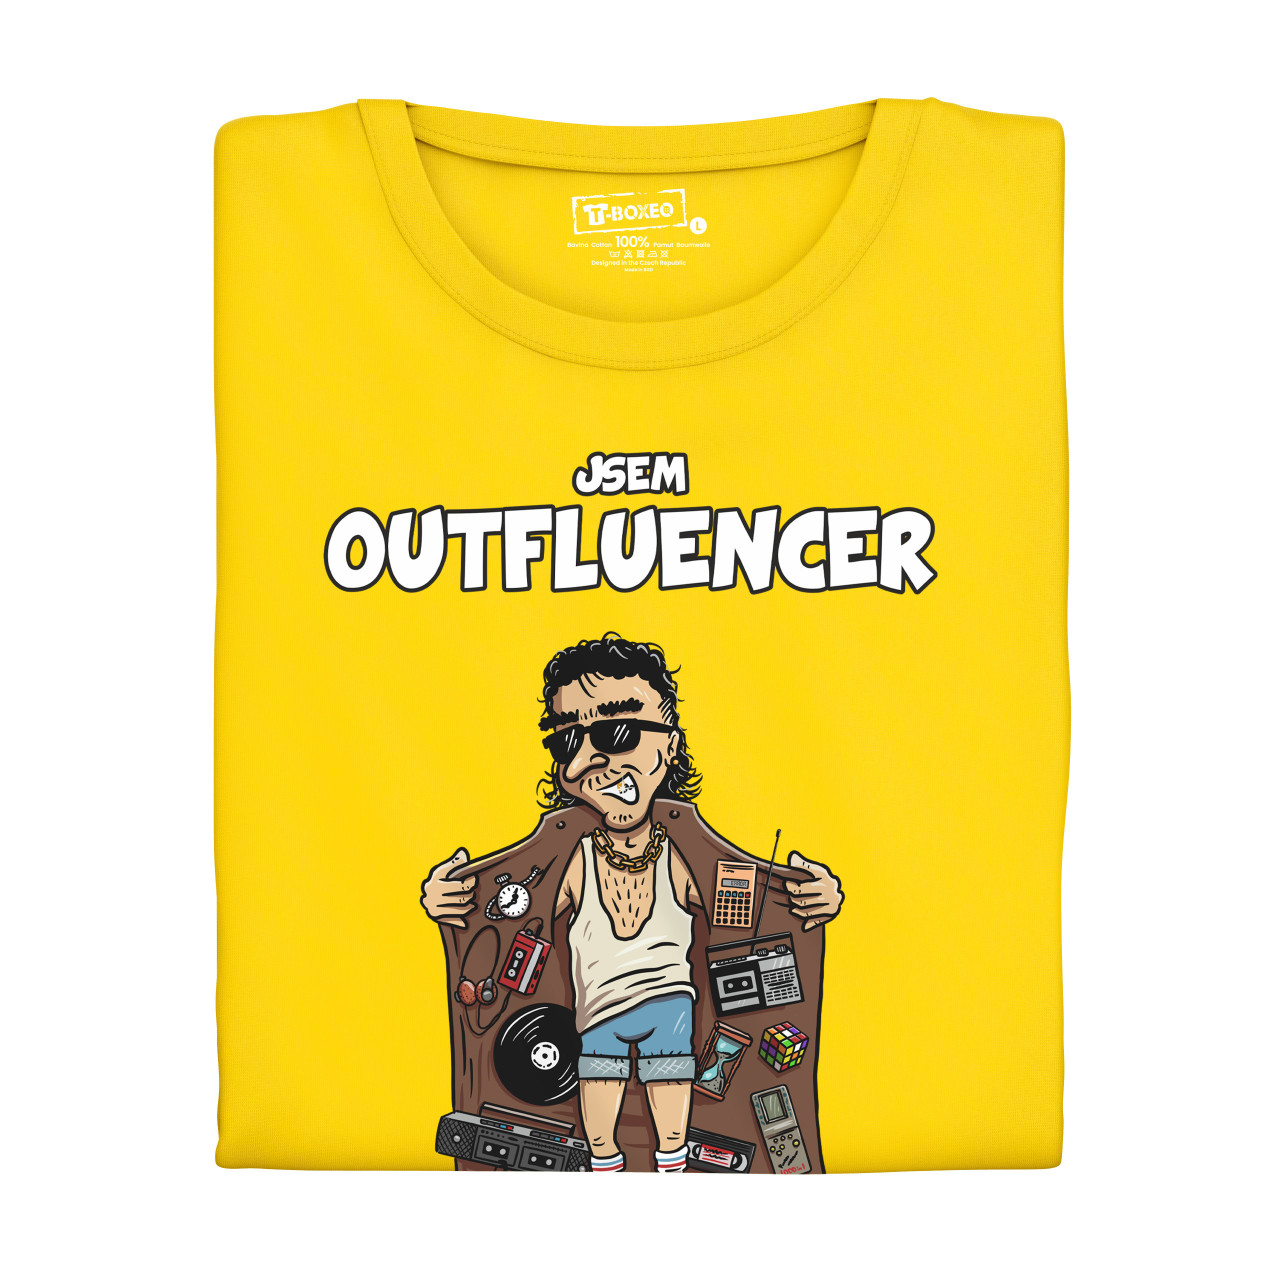 Pánské tričko s potiskem "Outfluencer"